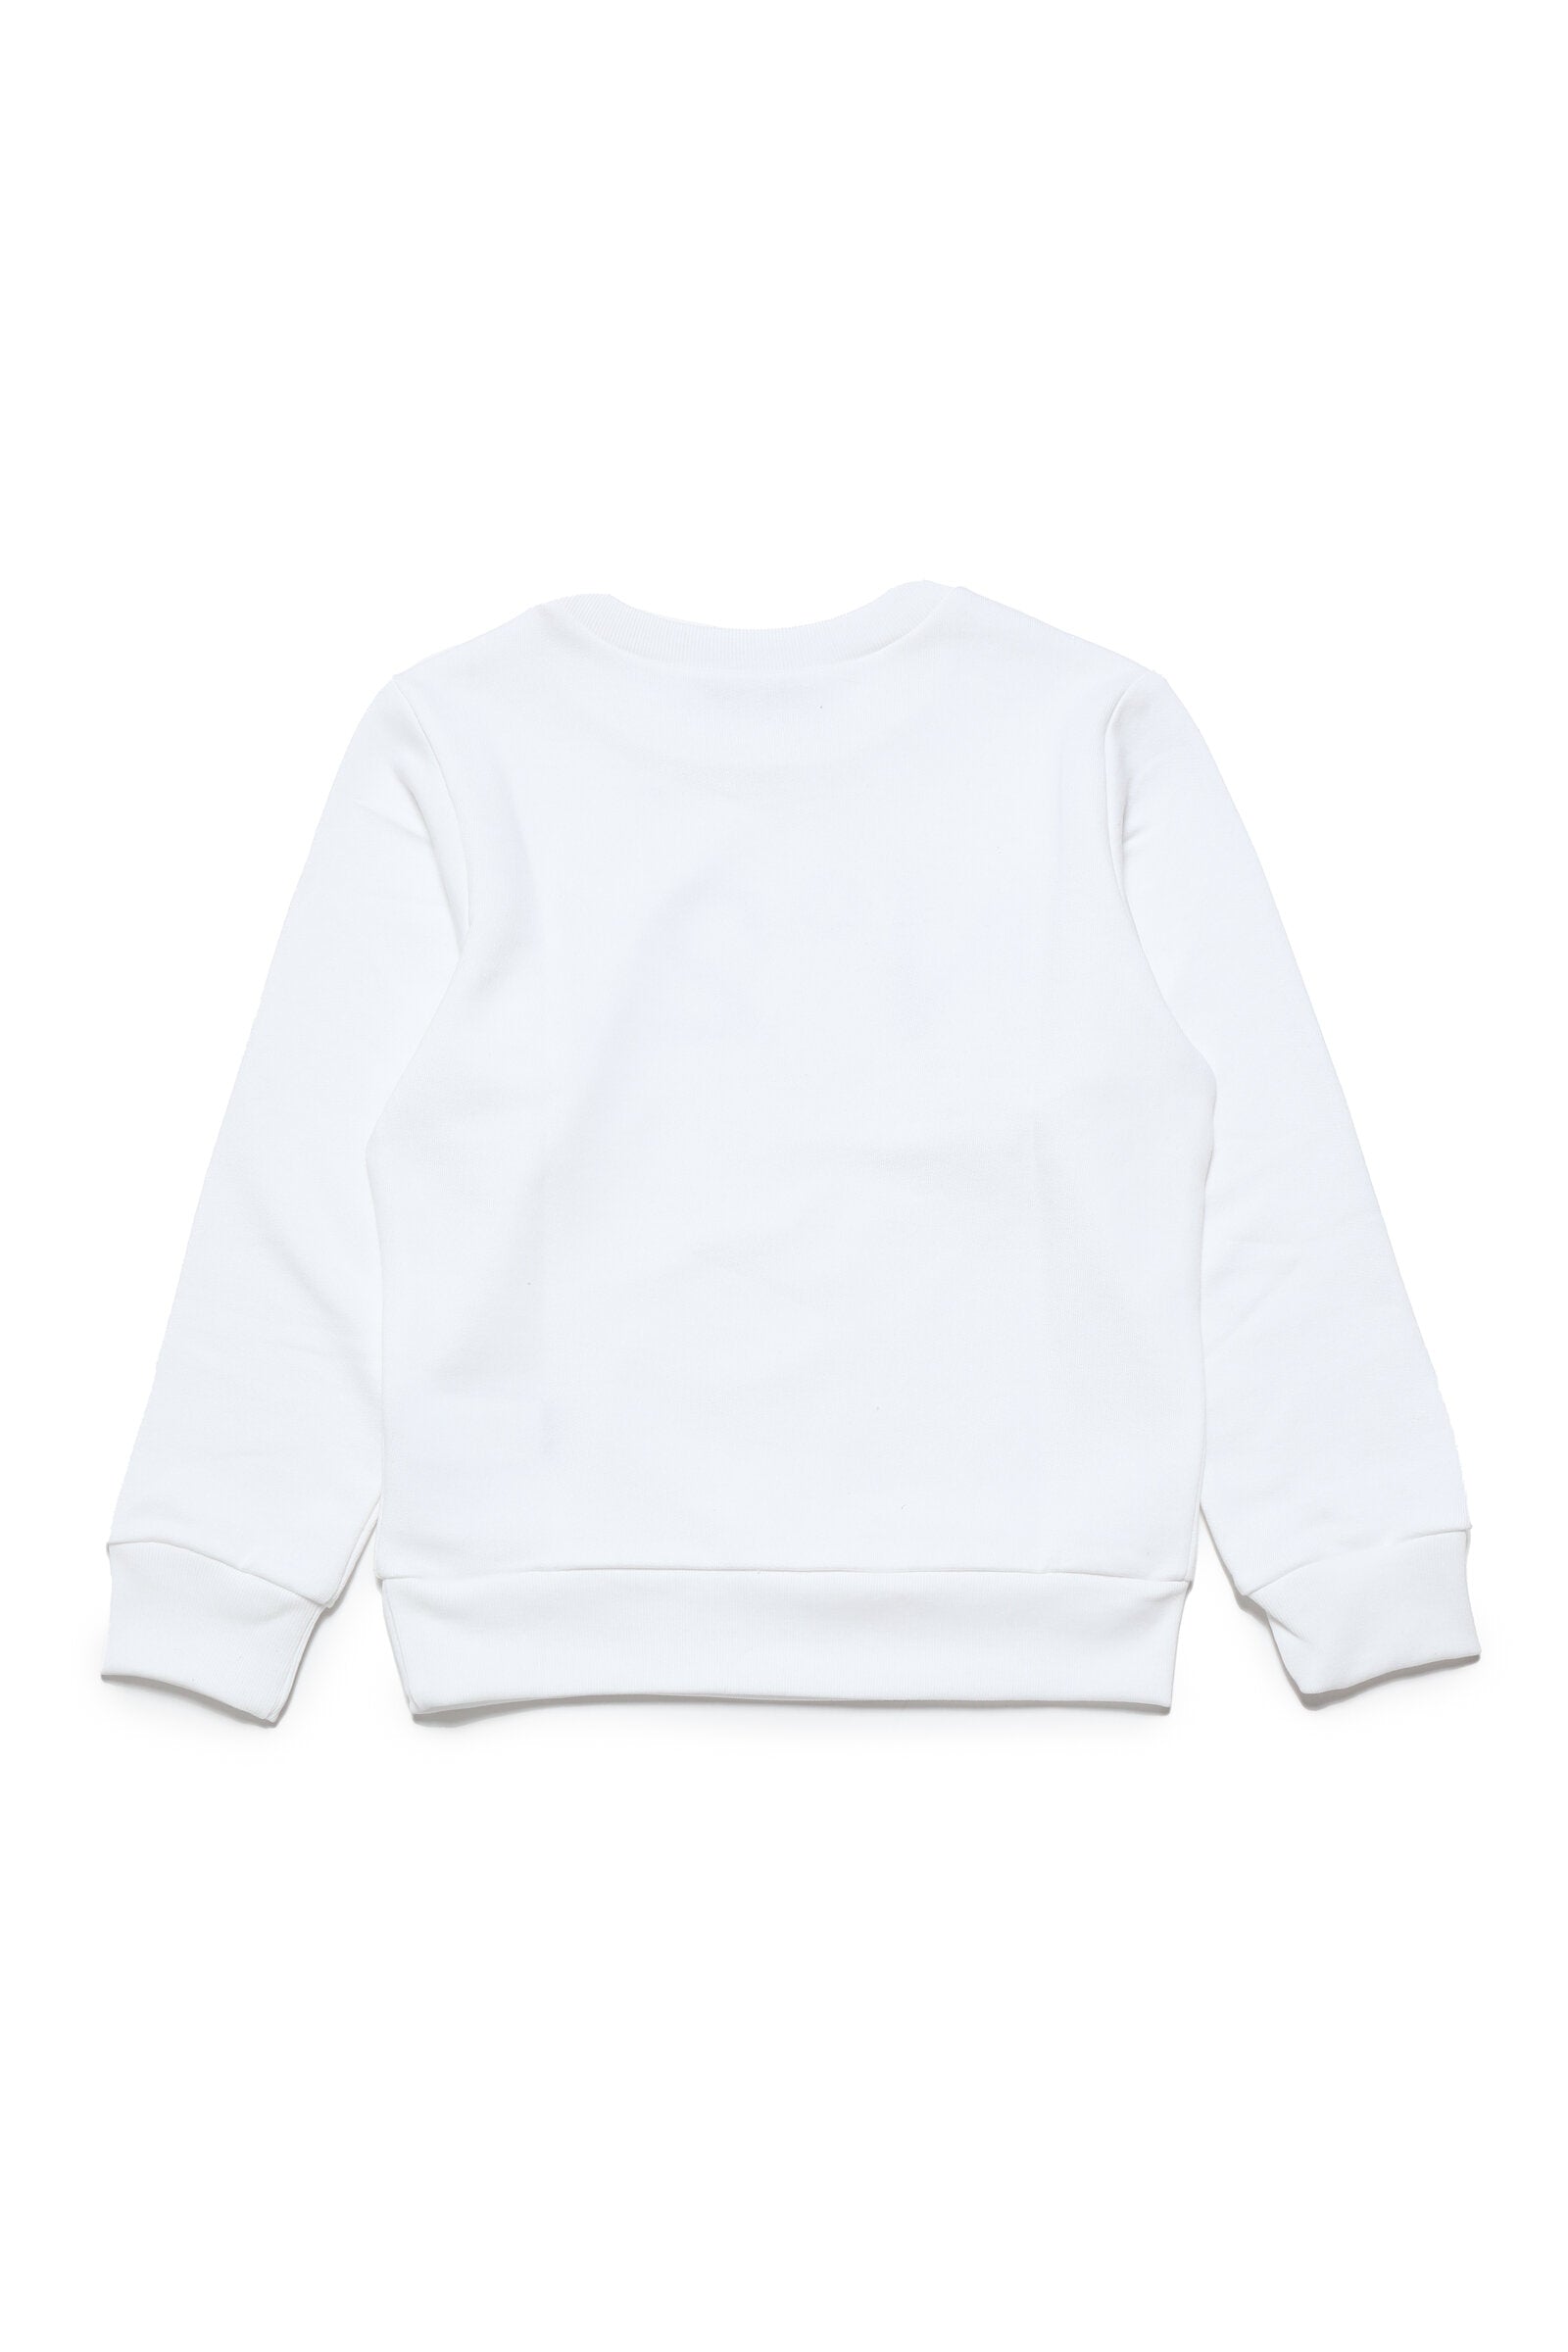 White cotton crew-neck sweatshirt with logo